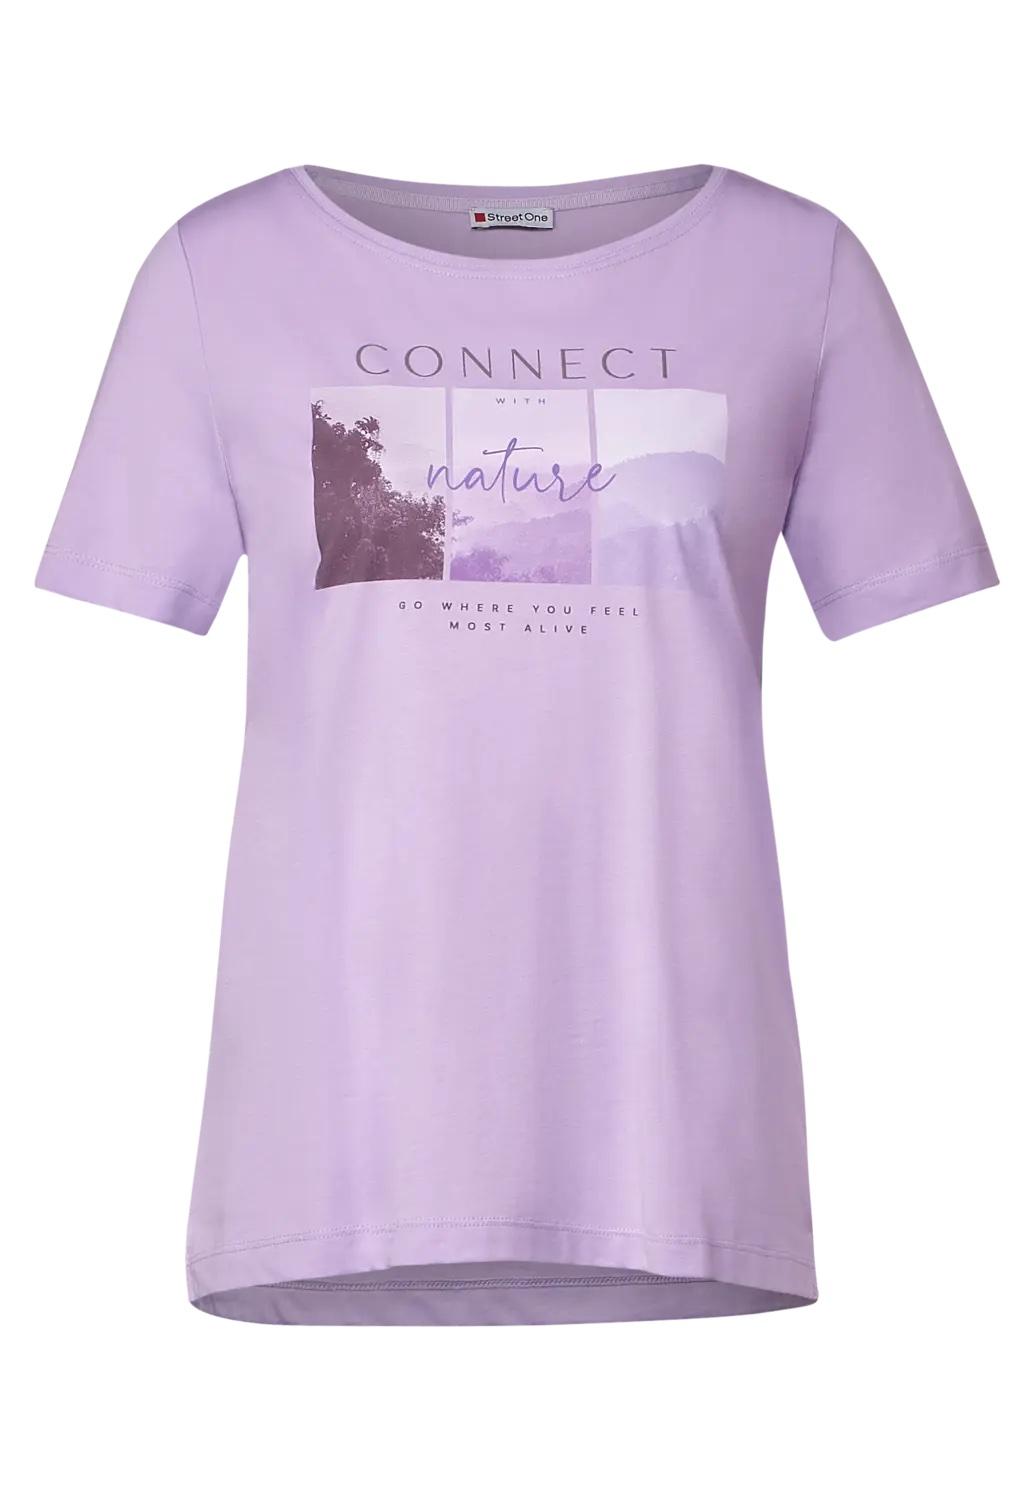 Street One tričko s fototlačou CONNECT, lila